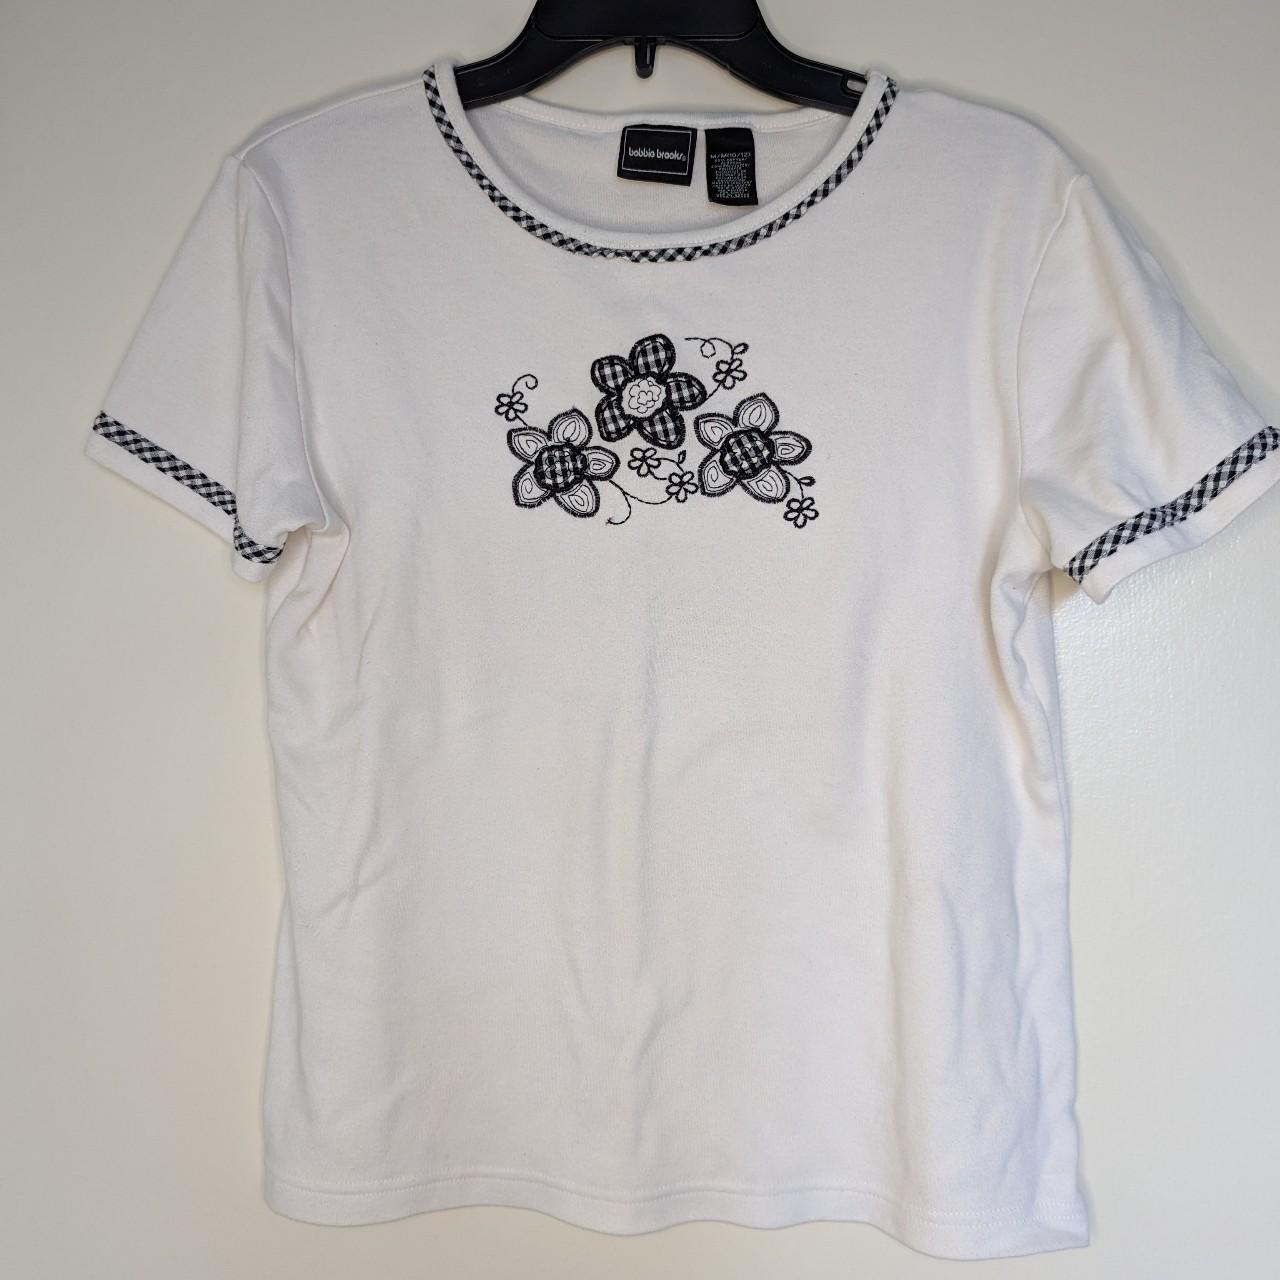 American Vintage Women's Shirt - White - M